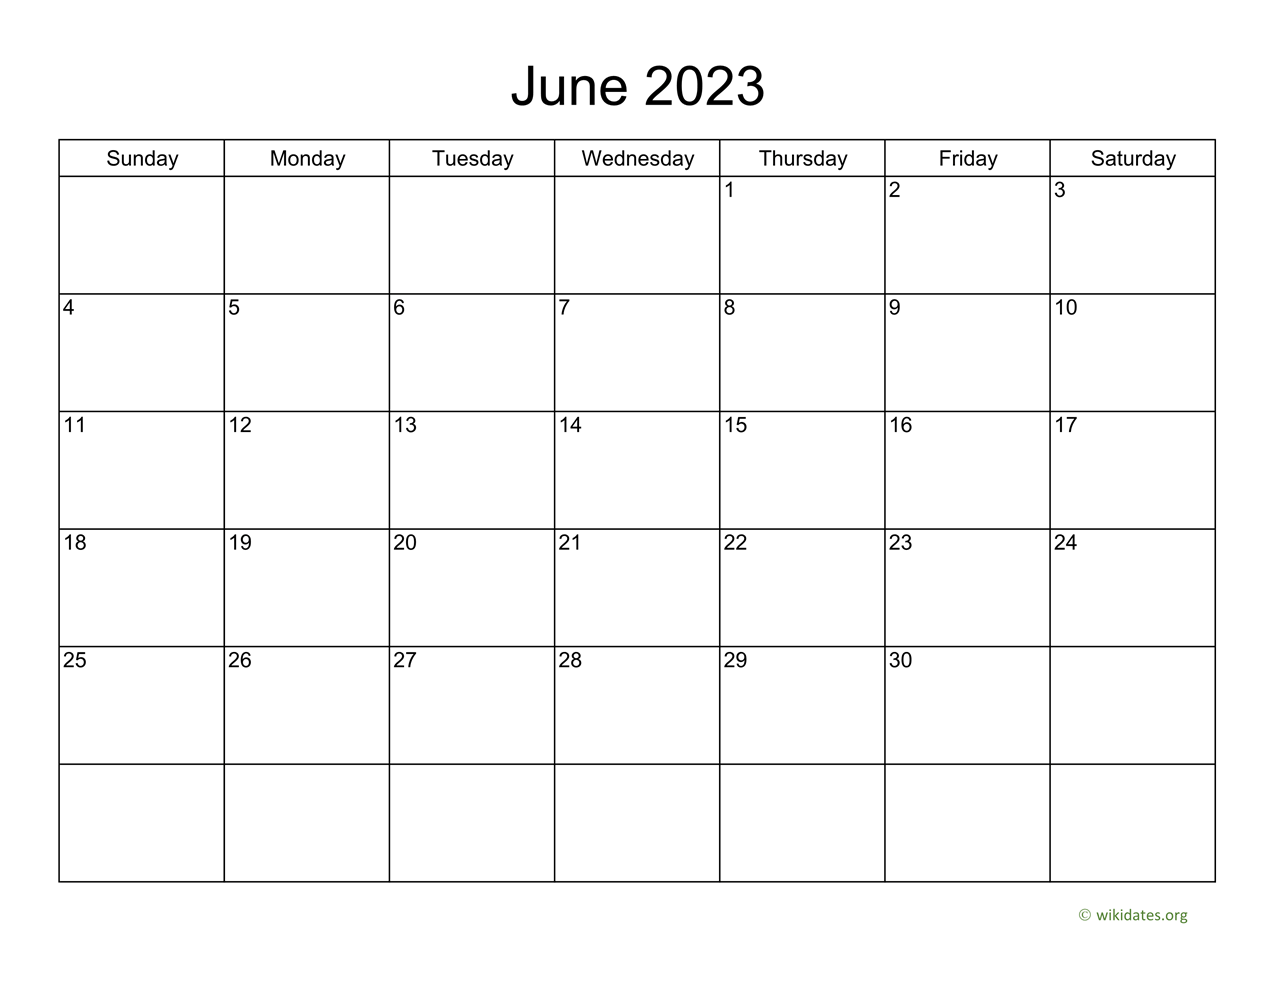 basic-calendar-for-june-2023-wikidates